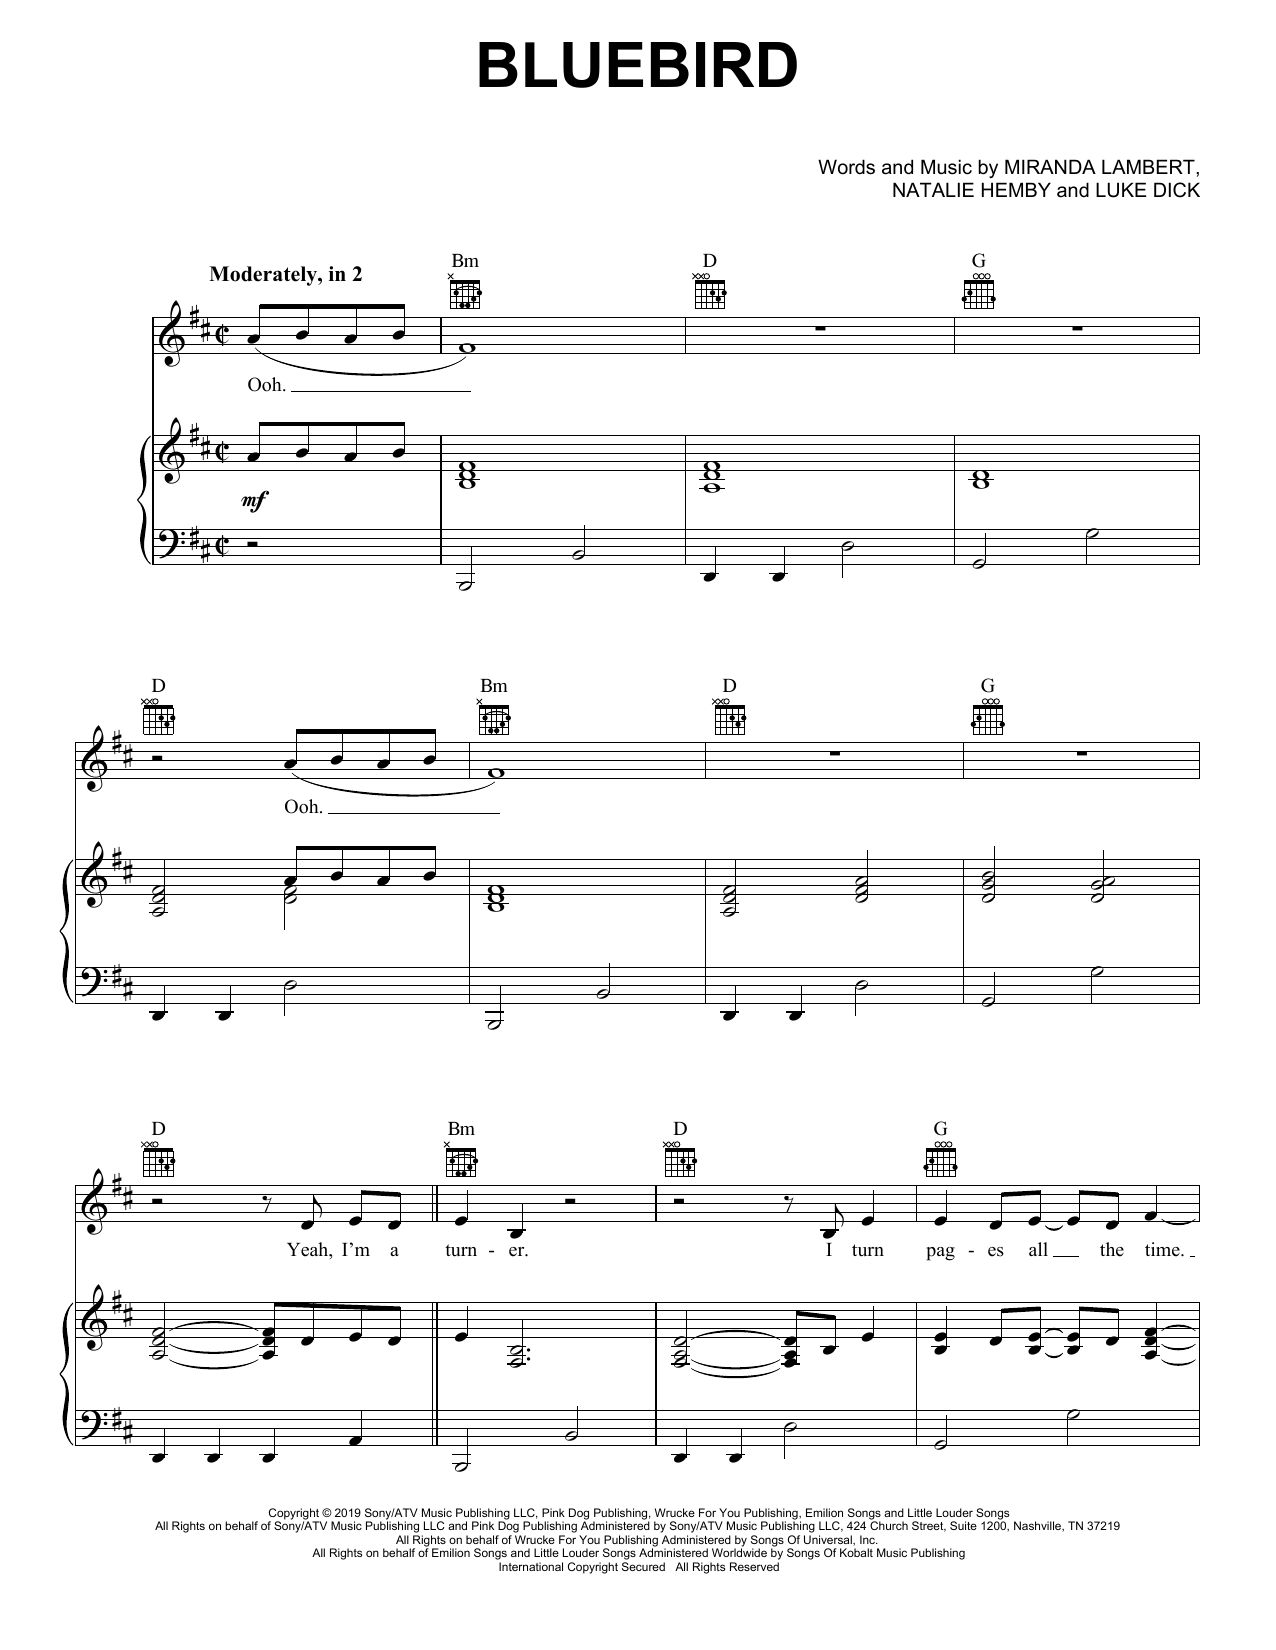 Miranda Lambert Bluebird Sheet Music Notes & Chords for Piano, Vocal & Guitar (Right-Hand Melody) - Download or Print PDF